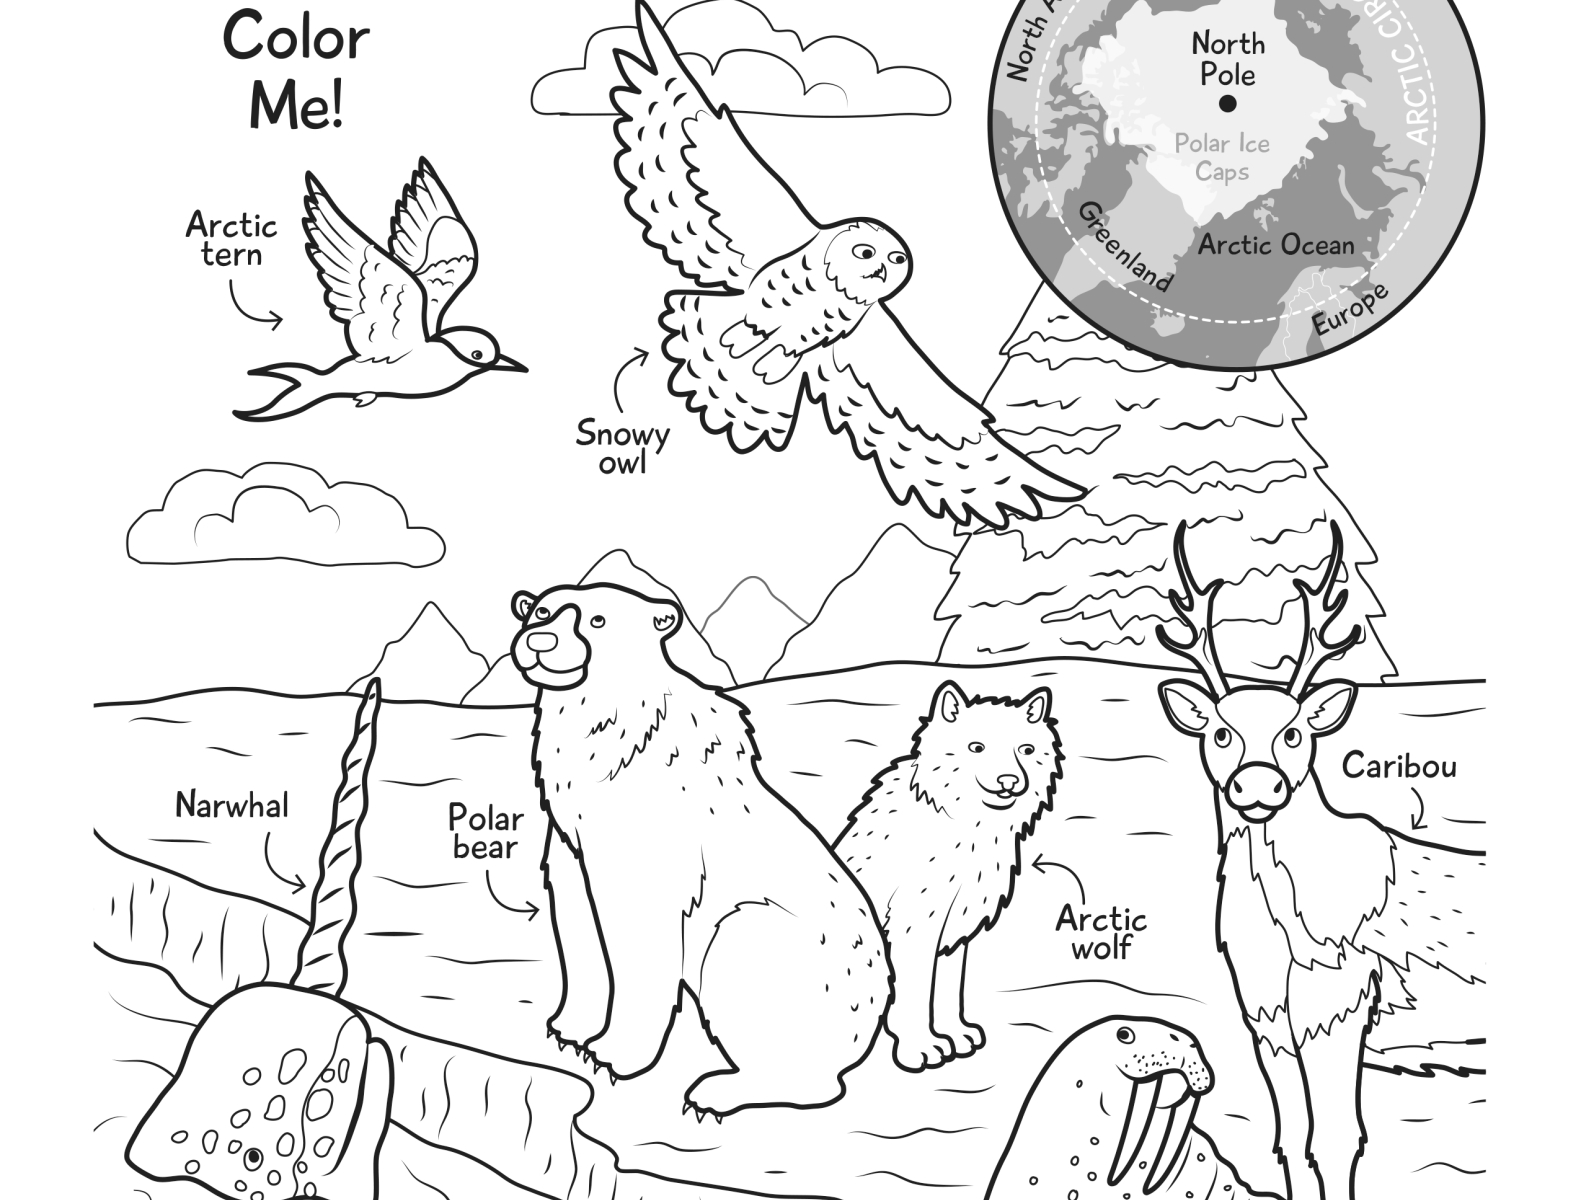 Arctic Animals coloring page by Sara Lynn Cramb on Dribbble